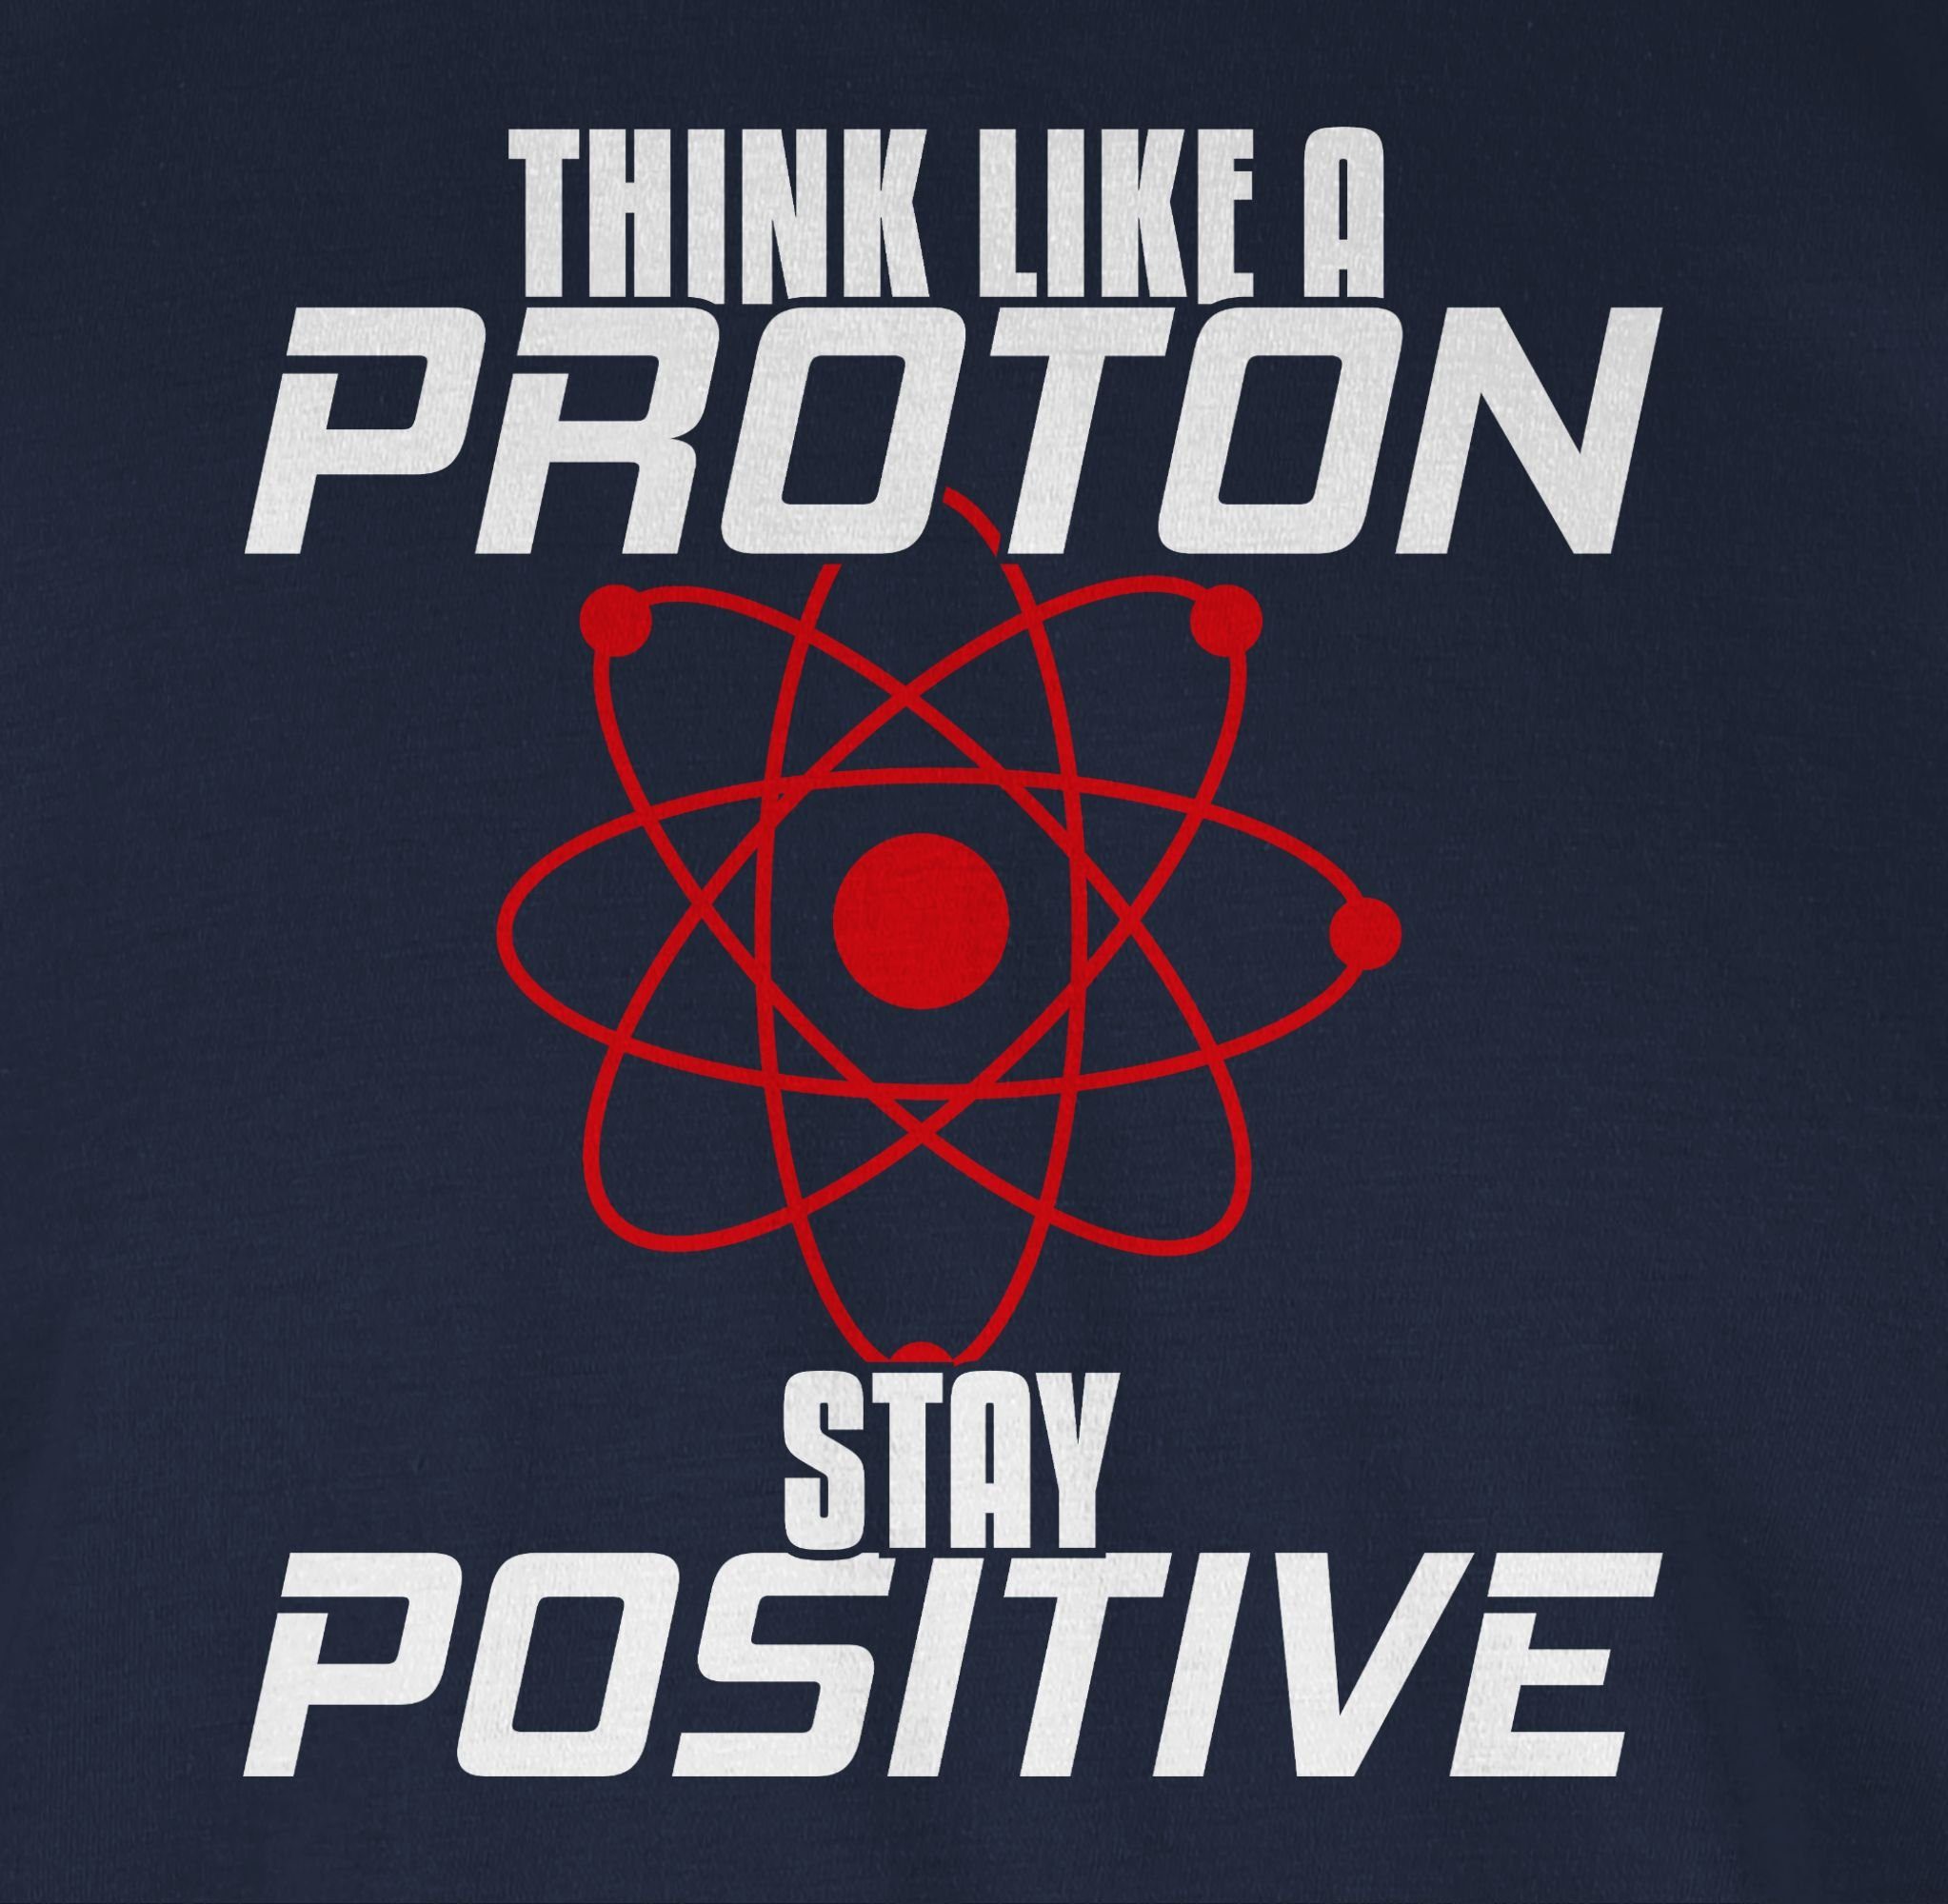 T-Shirt Blau Geschenke Think stay proton 2 Nerd Navy a like positive Shirtracer